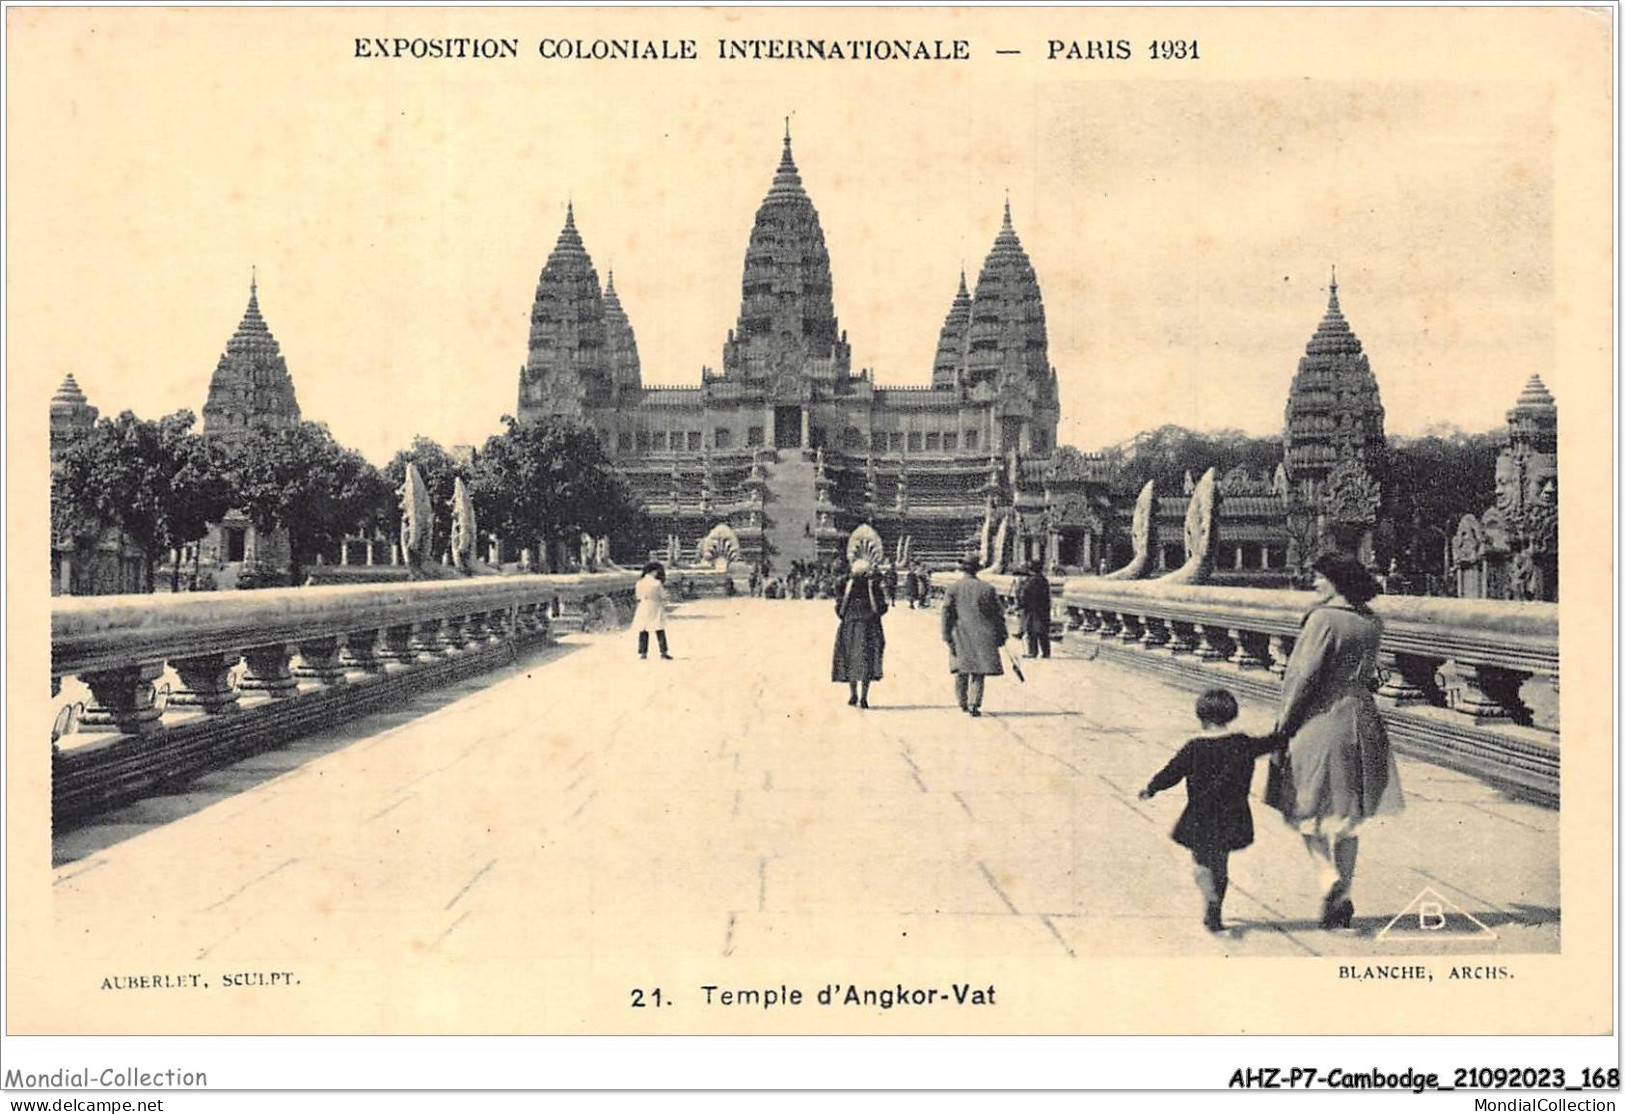 AHZP7-CAMBODGE-0680 - EXPOSITION COLONIALE INTERNATIONALE - PARIS 1931 - TEMPLE D'ANGKOR-VAT - Kambodscha